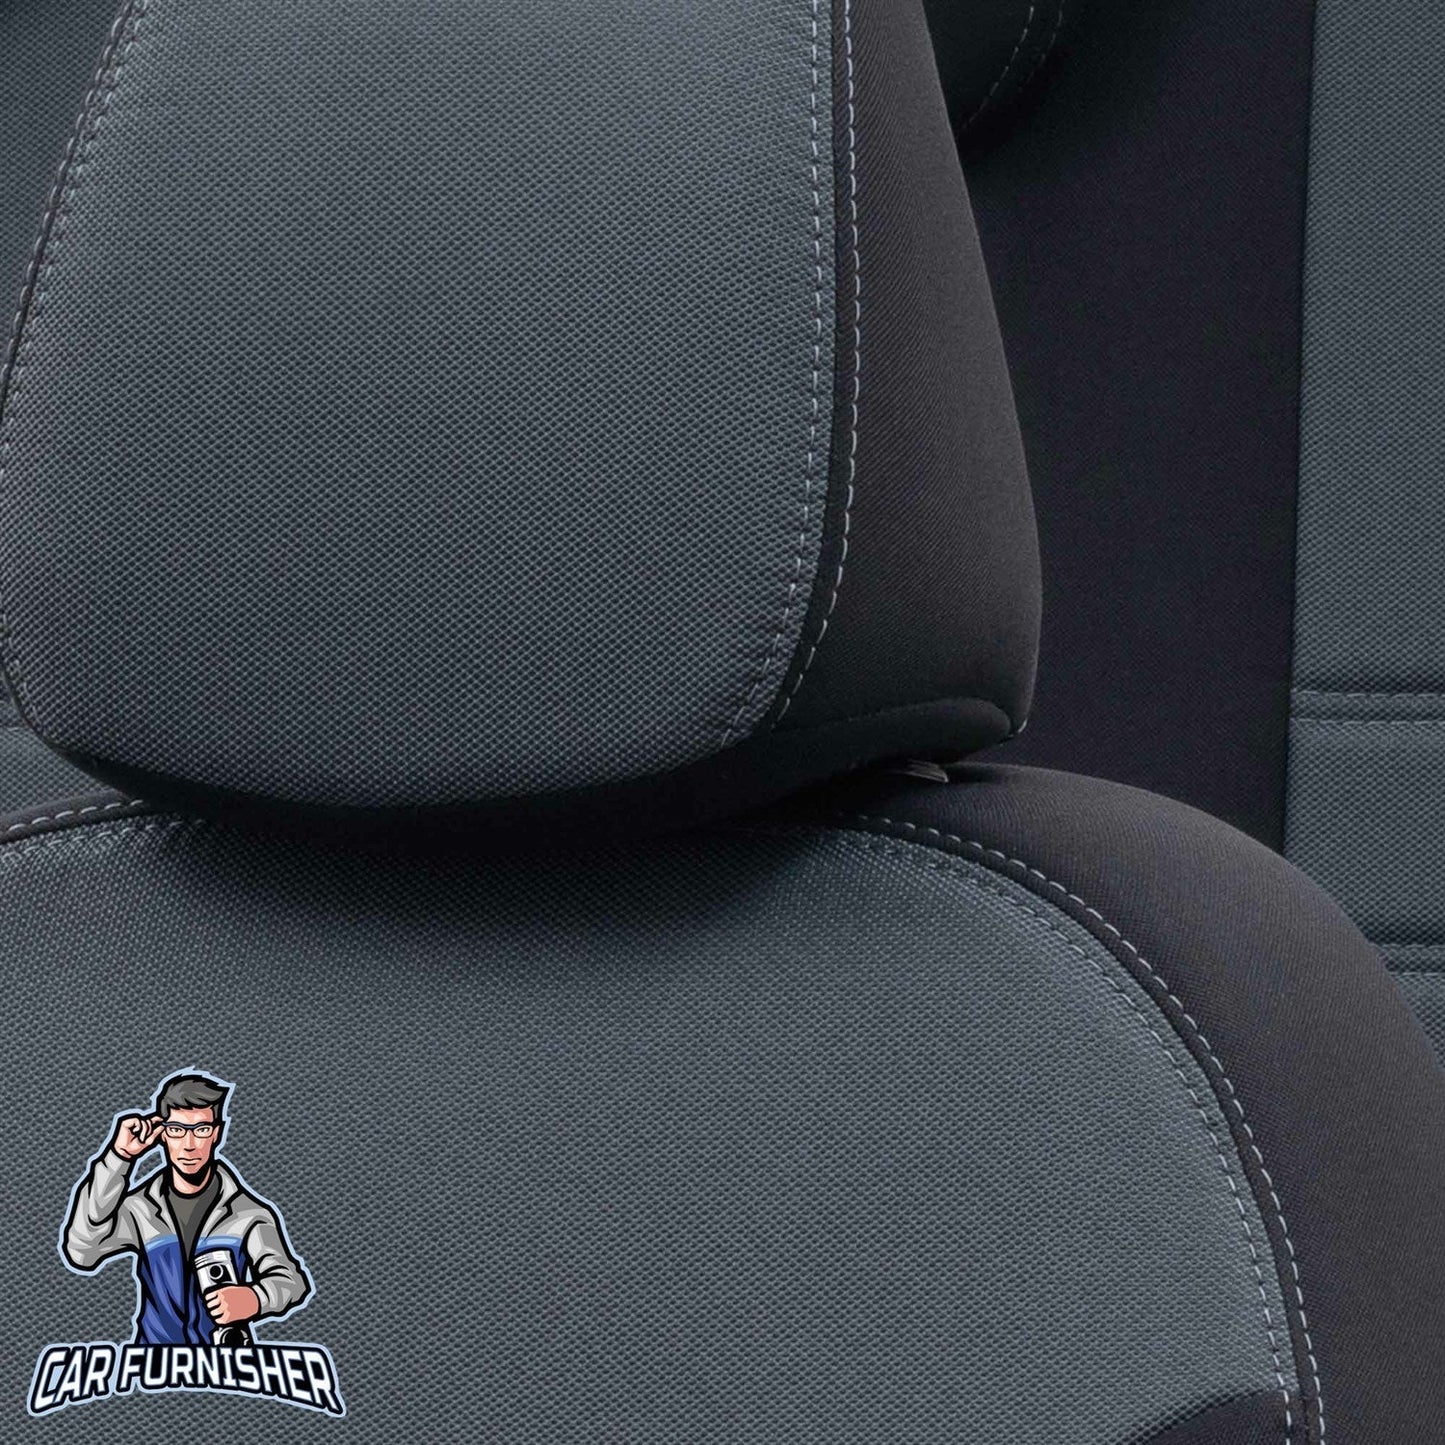 Seat Altea Seat Covers Original Jacquard Design Smoked Black Jacquard Fabric